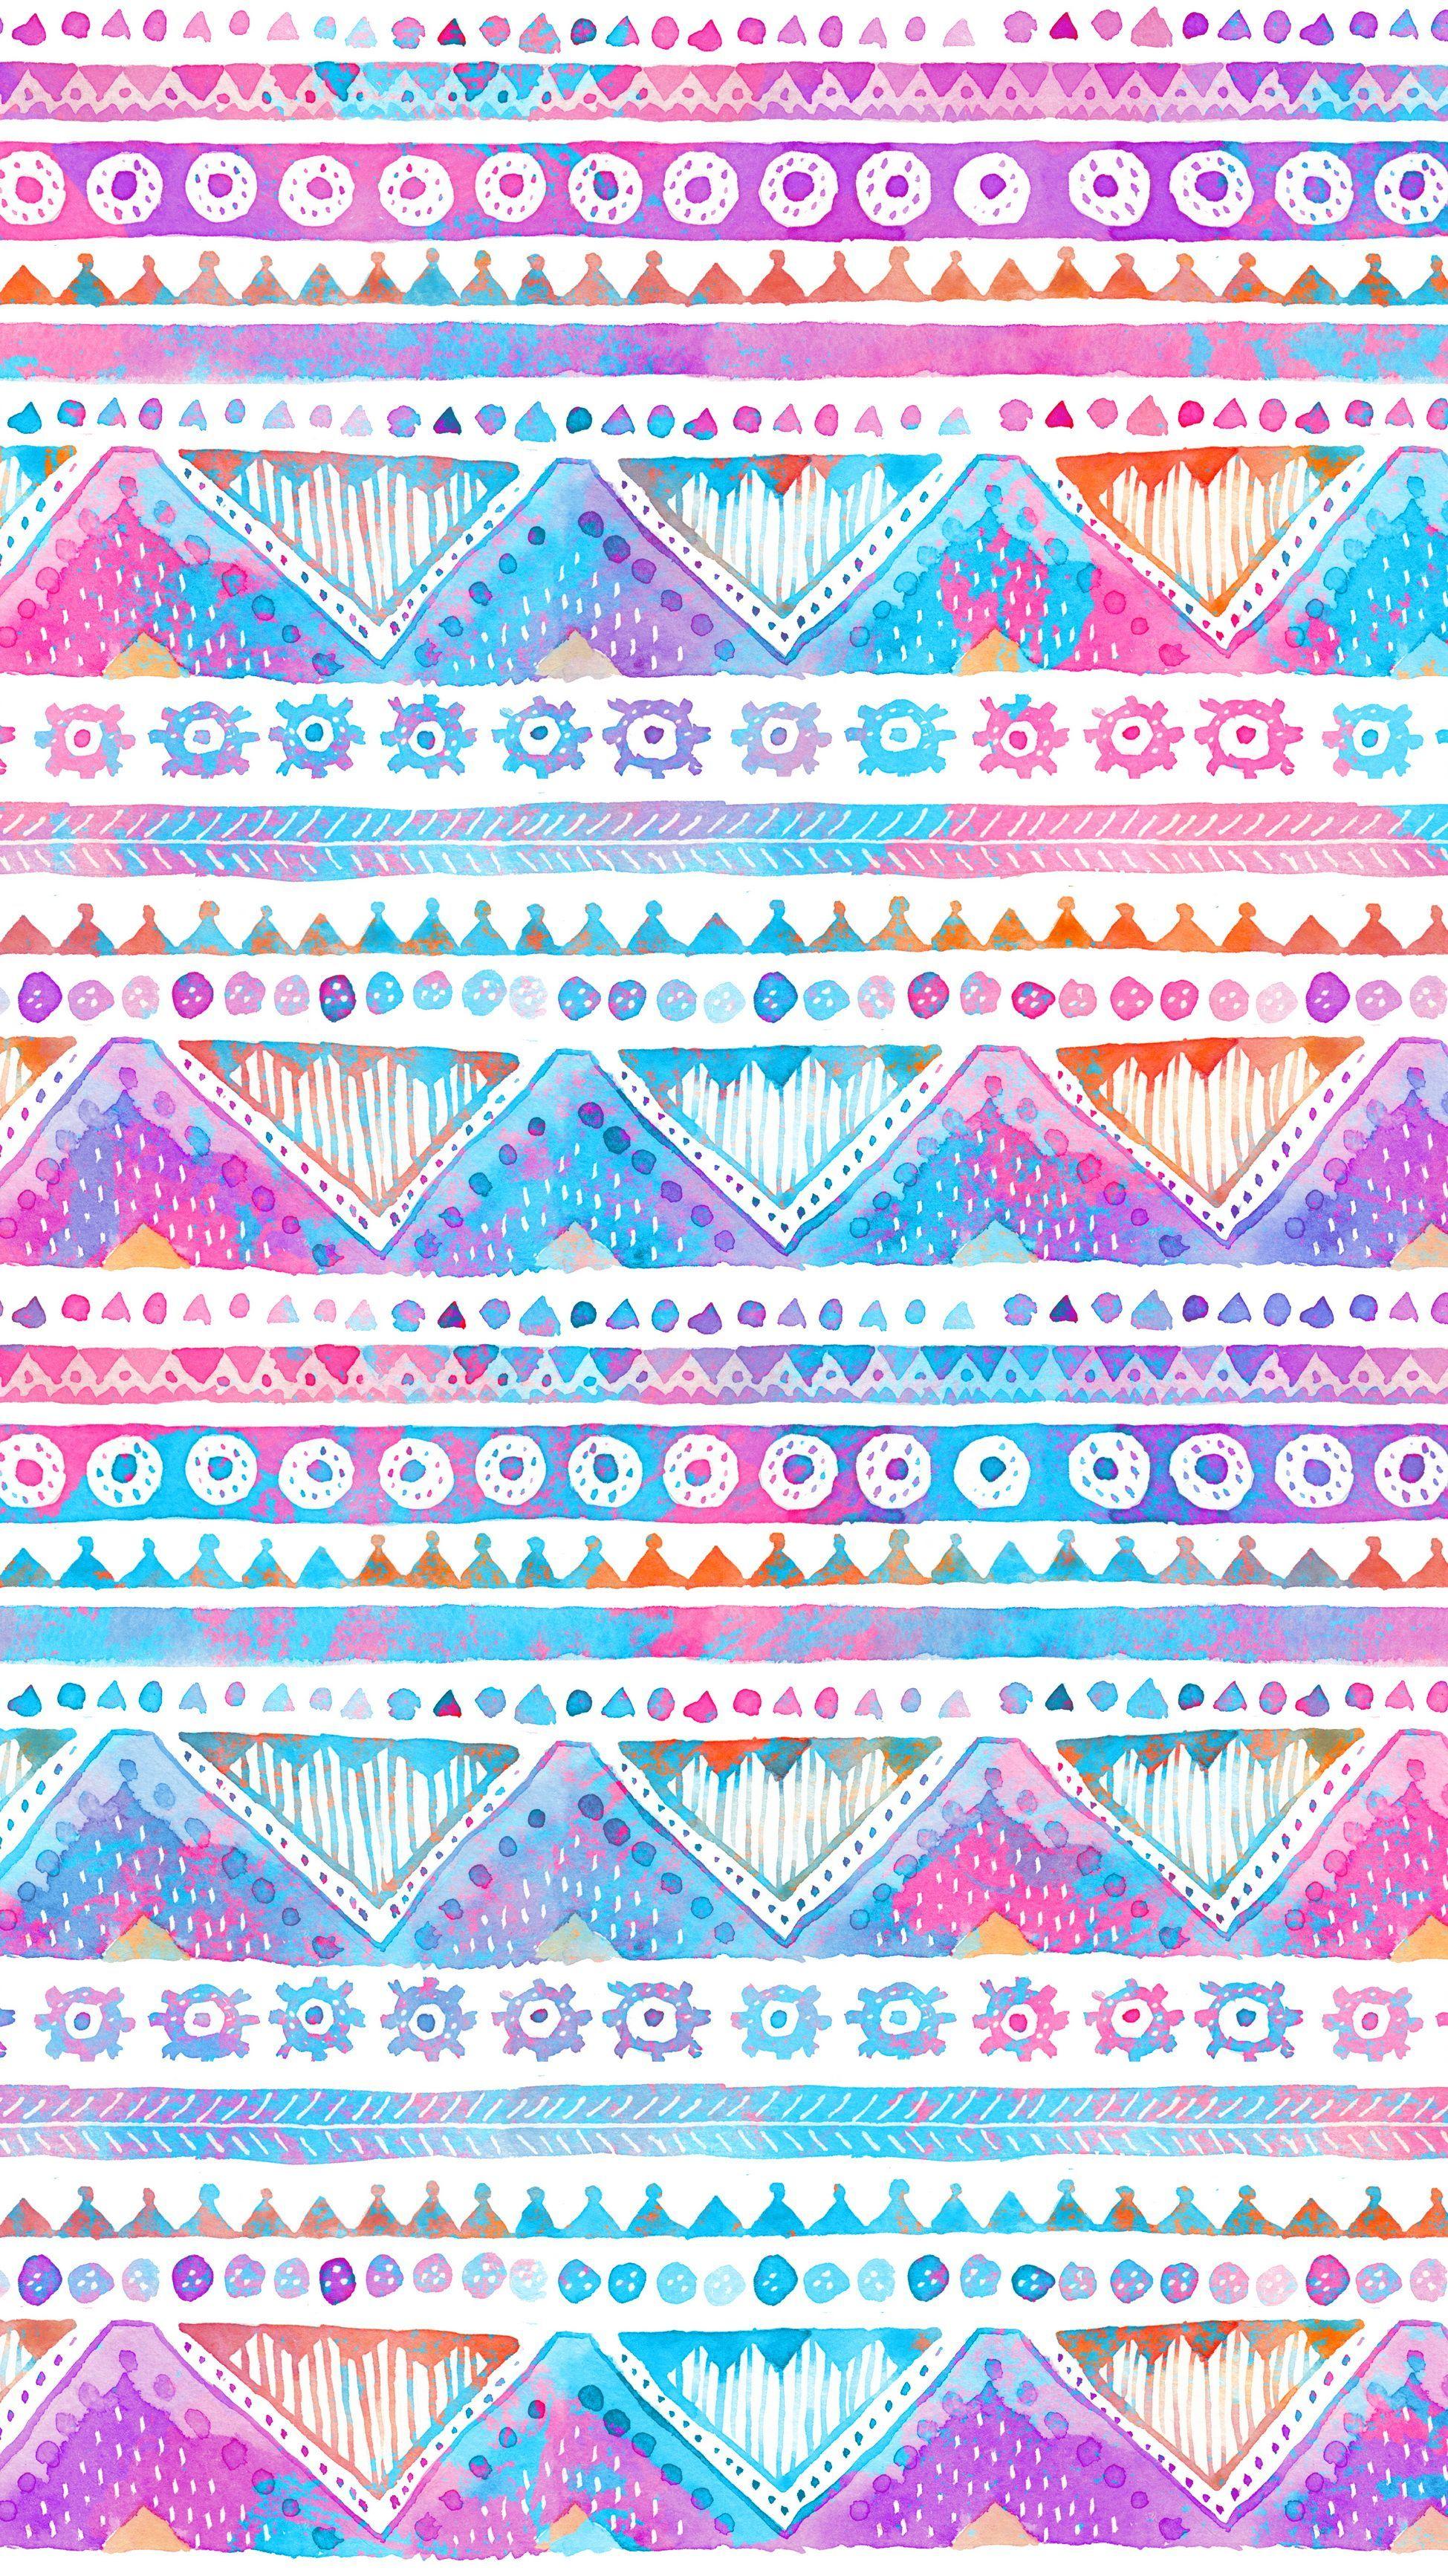 girly aztec patterns backgrounds